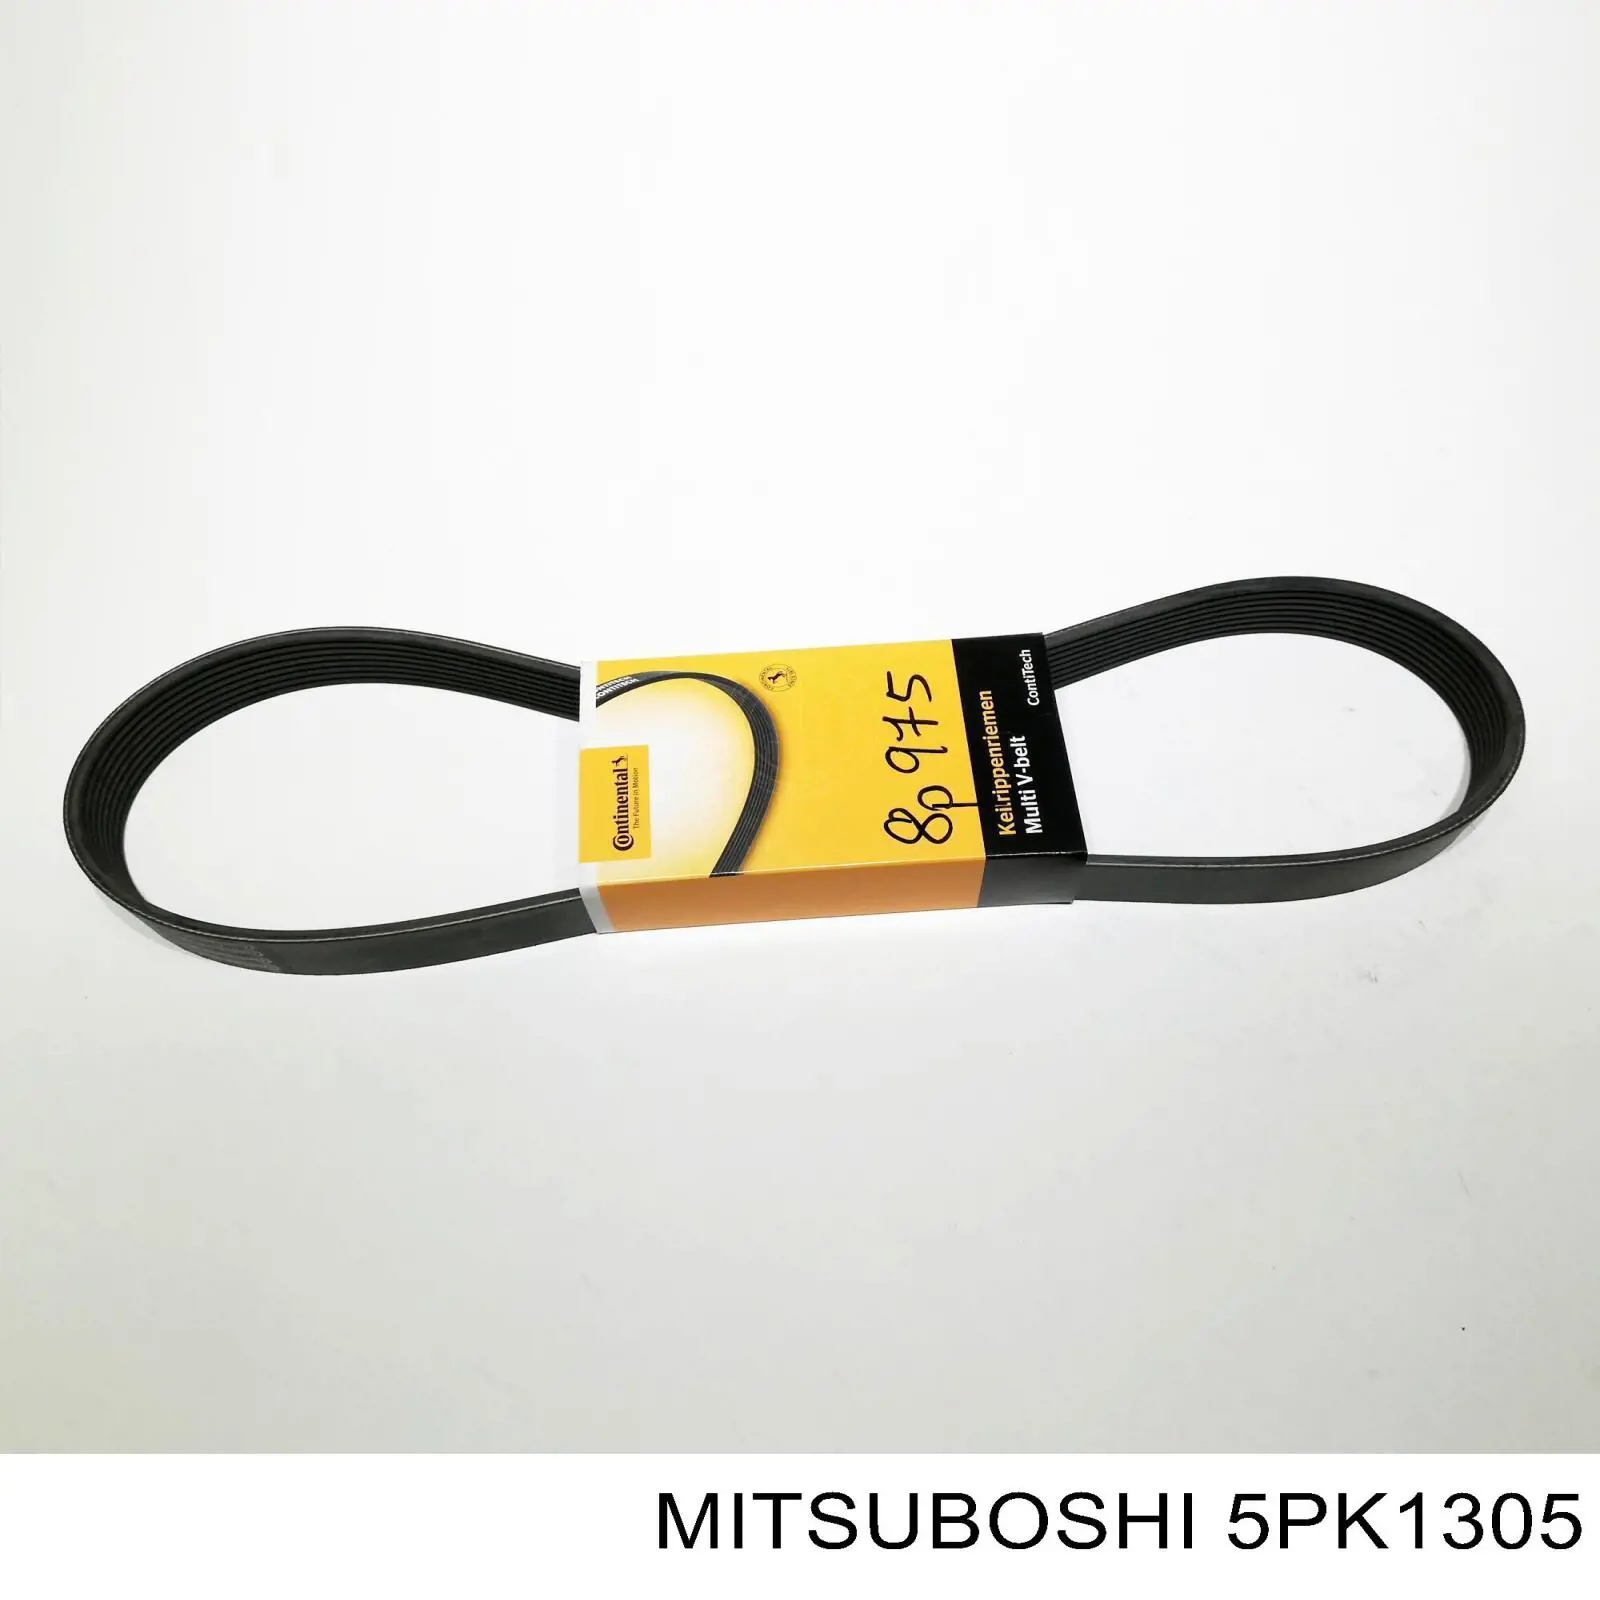 5PK1305 Mitsuboshi ремень генератора